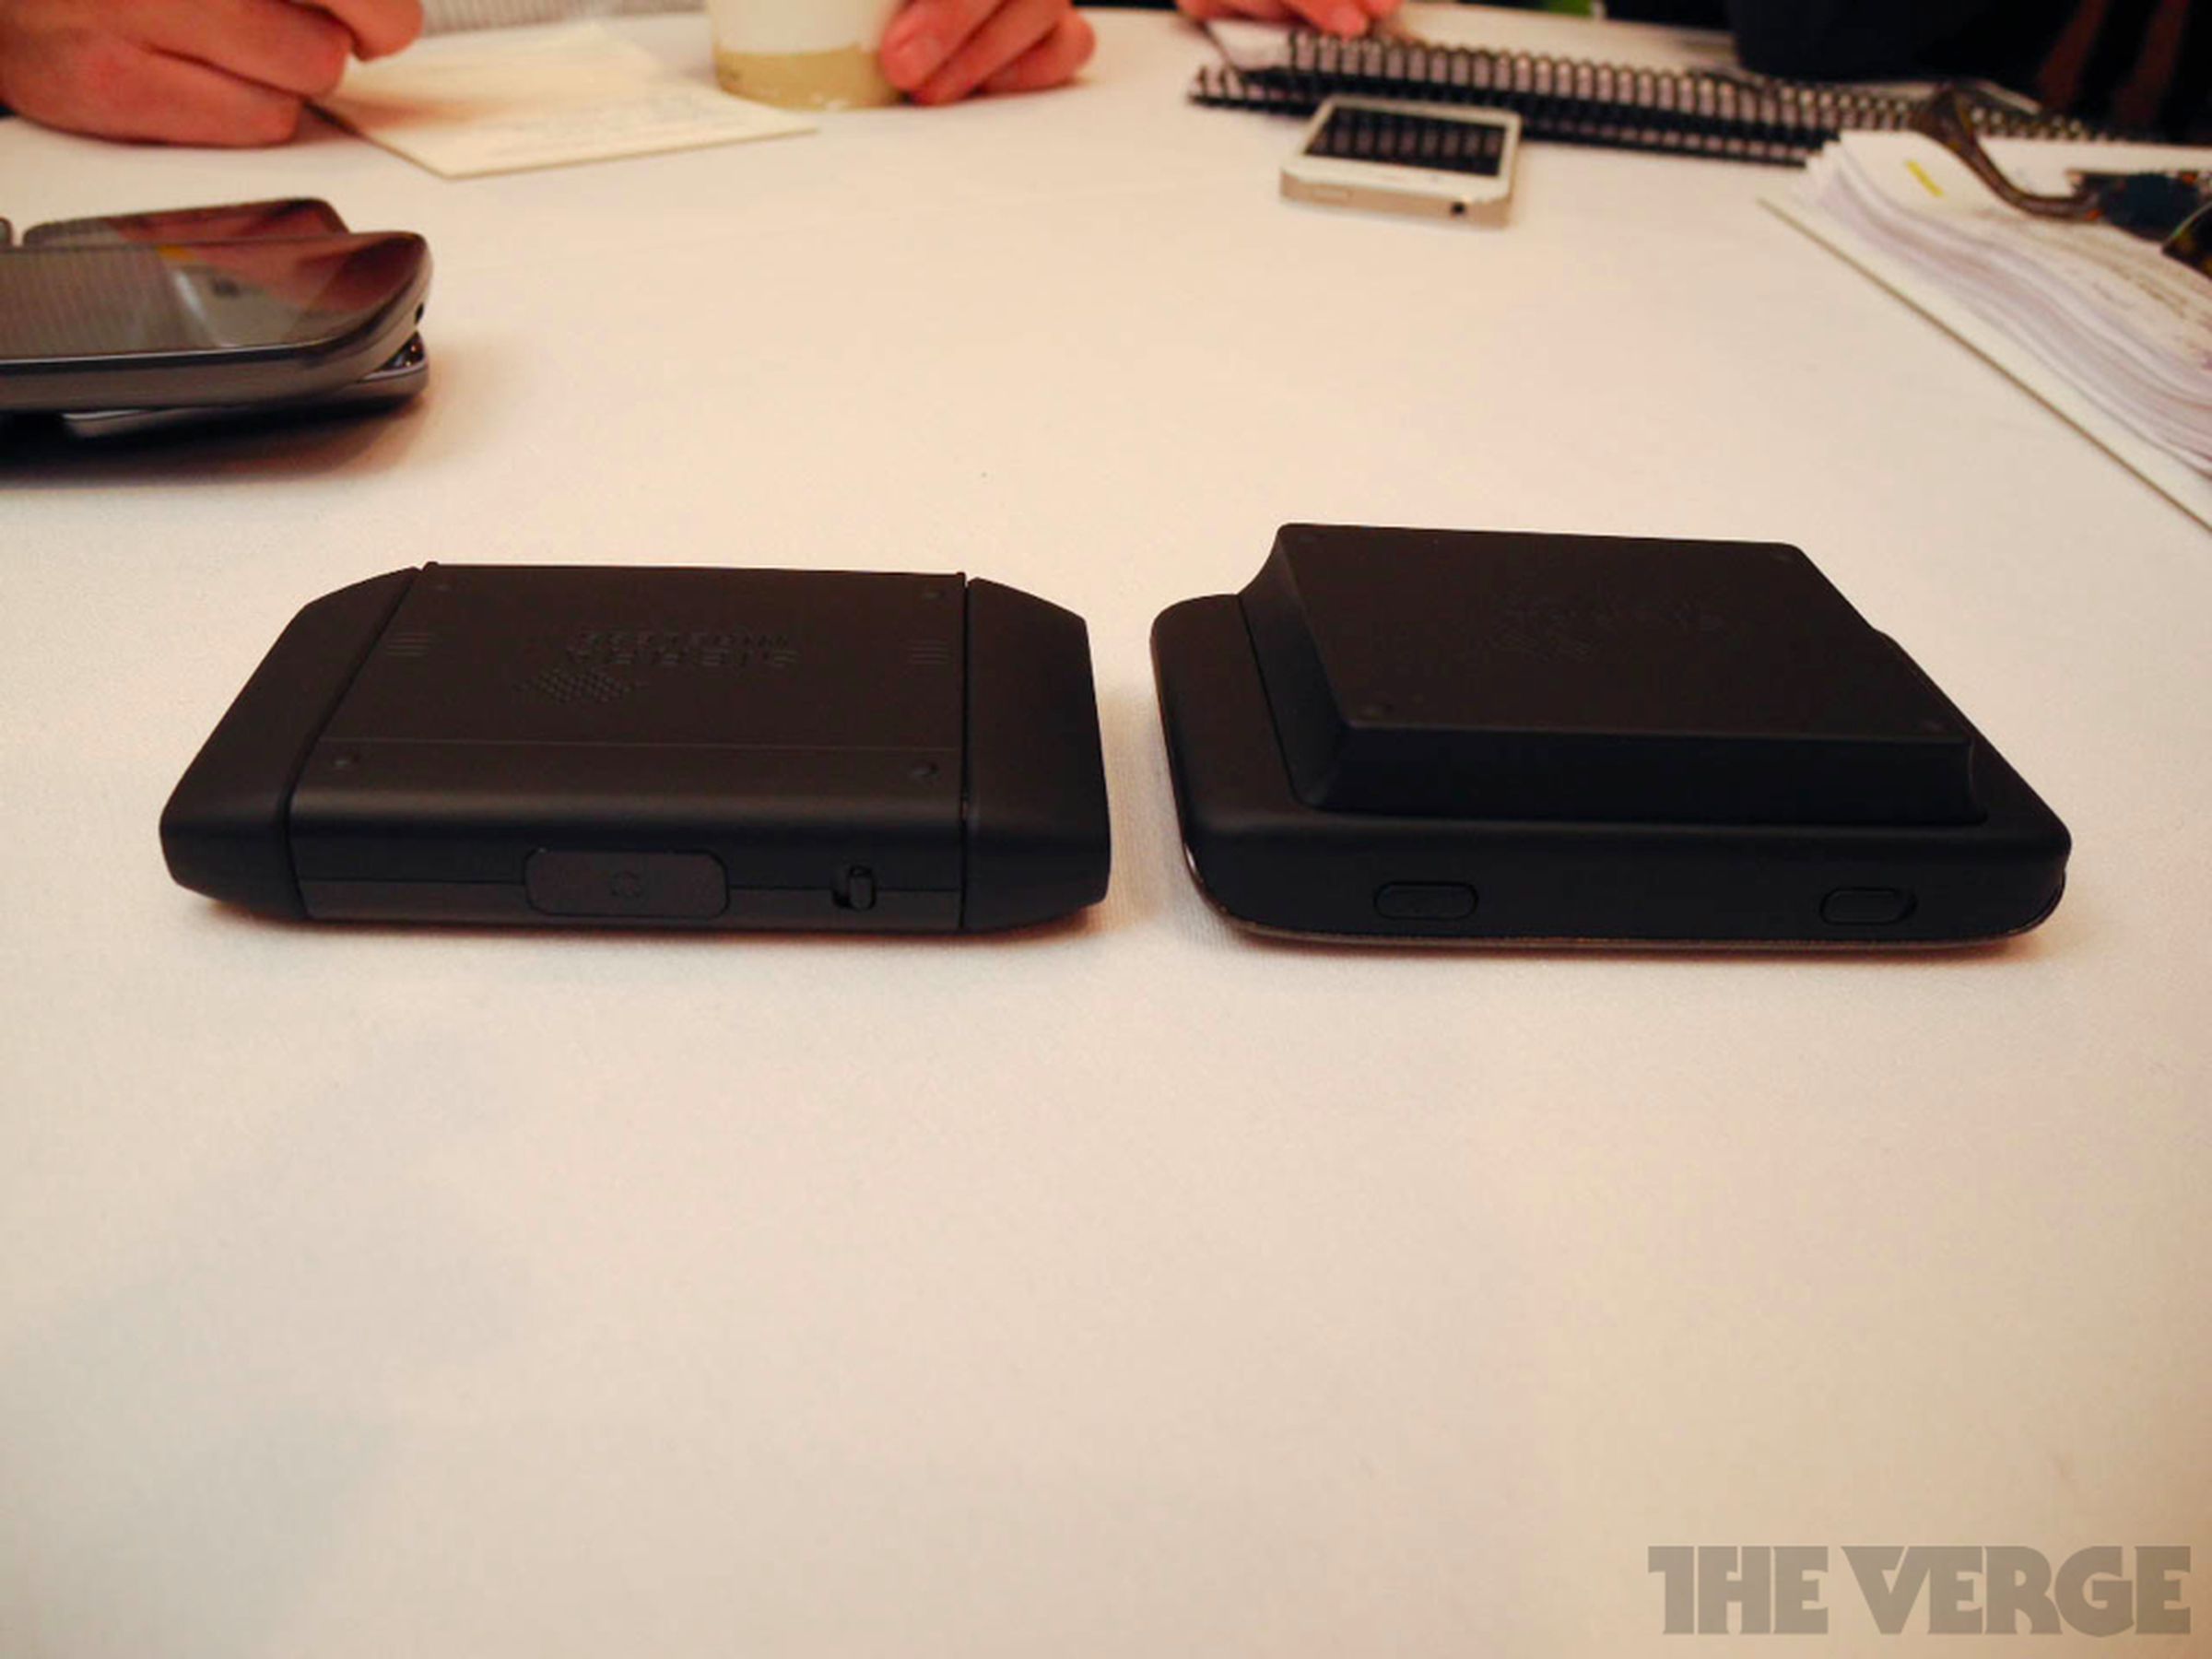 Sprint Galaxy Nexus, LG Viper, and Tri-Network Hotspot hands-on